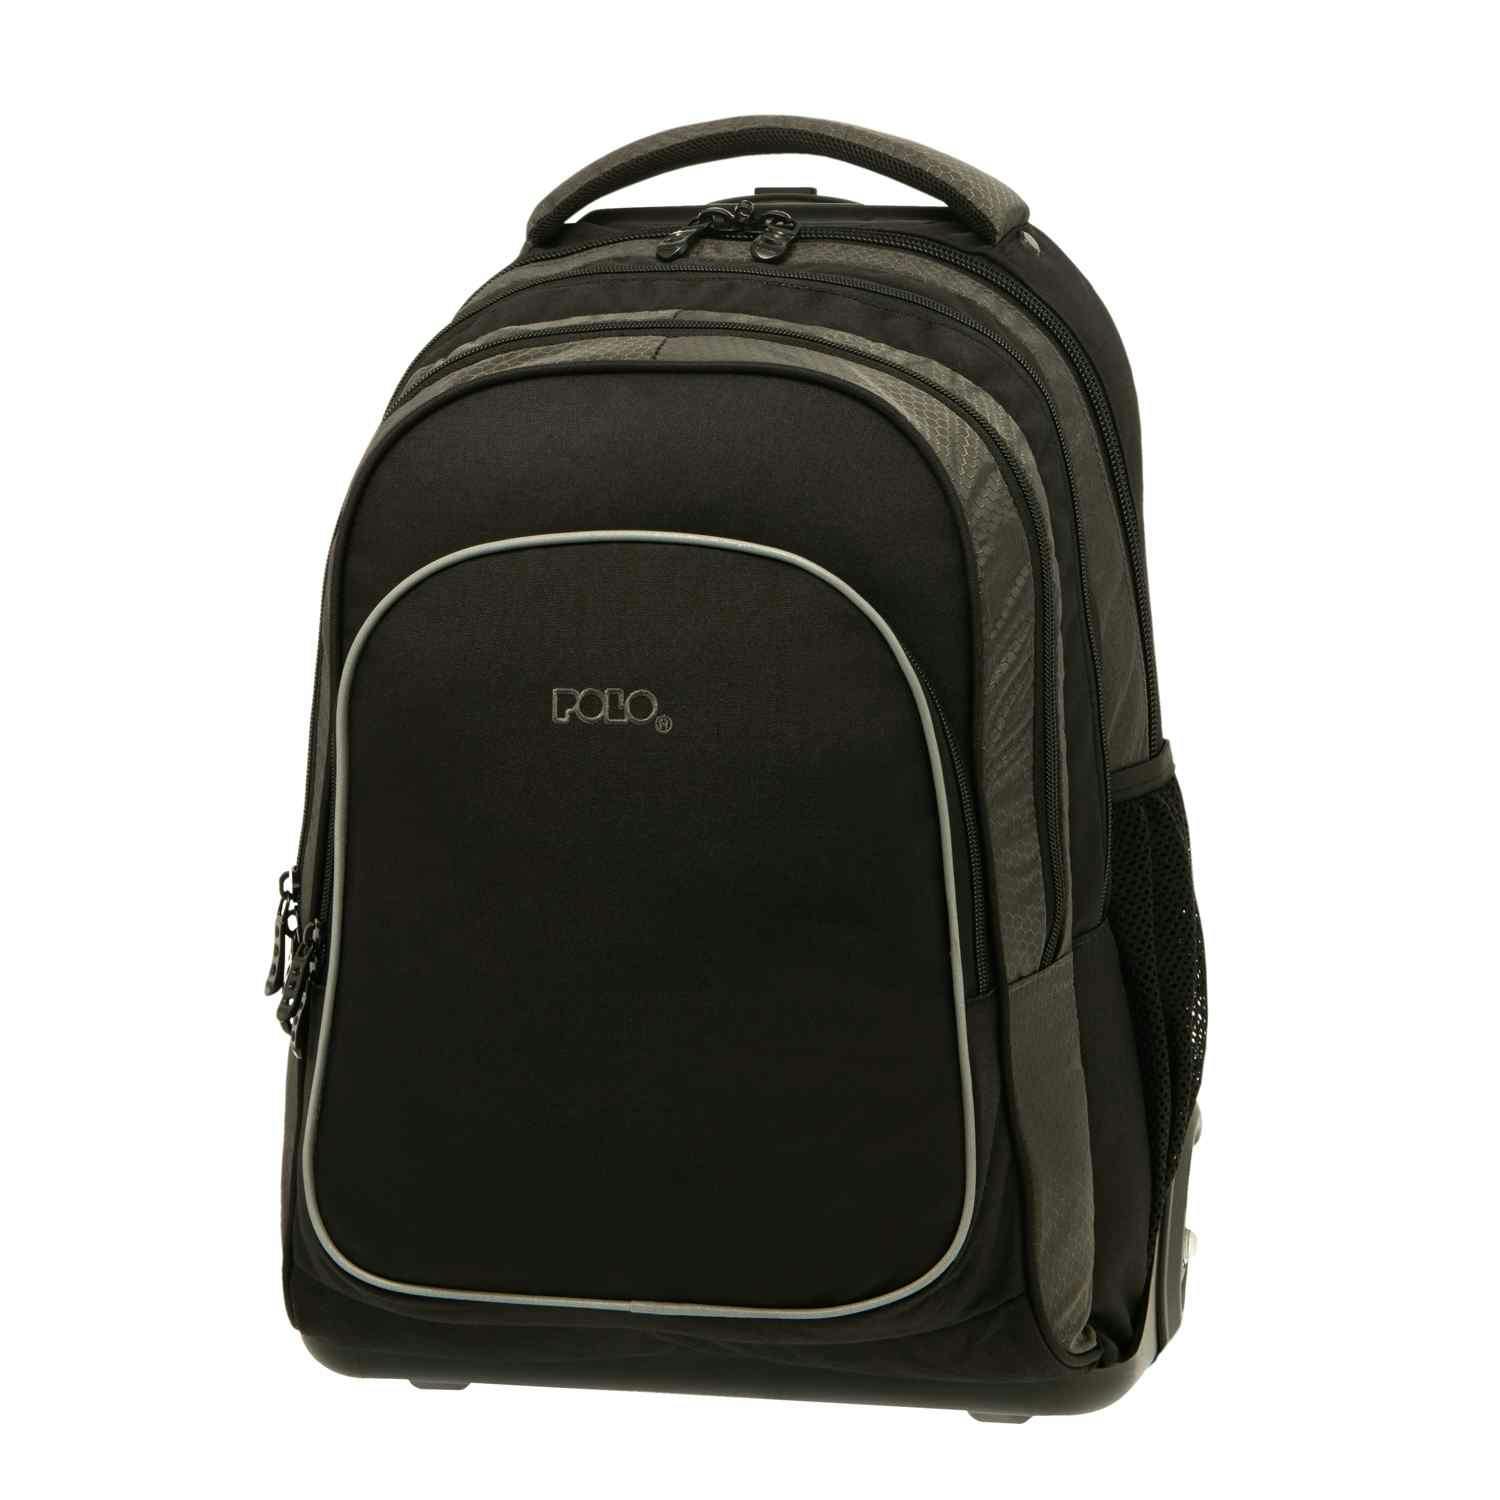 Polo COMPACT Trolley Bag Σχολική Τσάντα Τρόλευ Δημοτικού Χρώμα Μαύρο Μ35 x Π21 x Υ46cm 9-01-177-2000